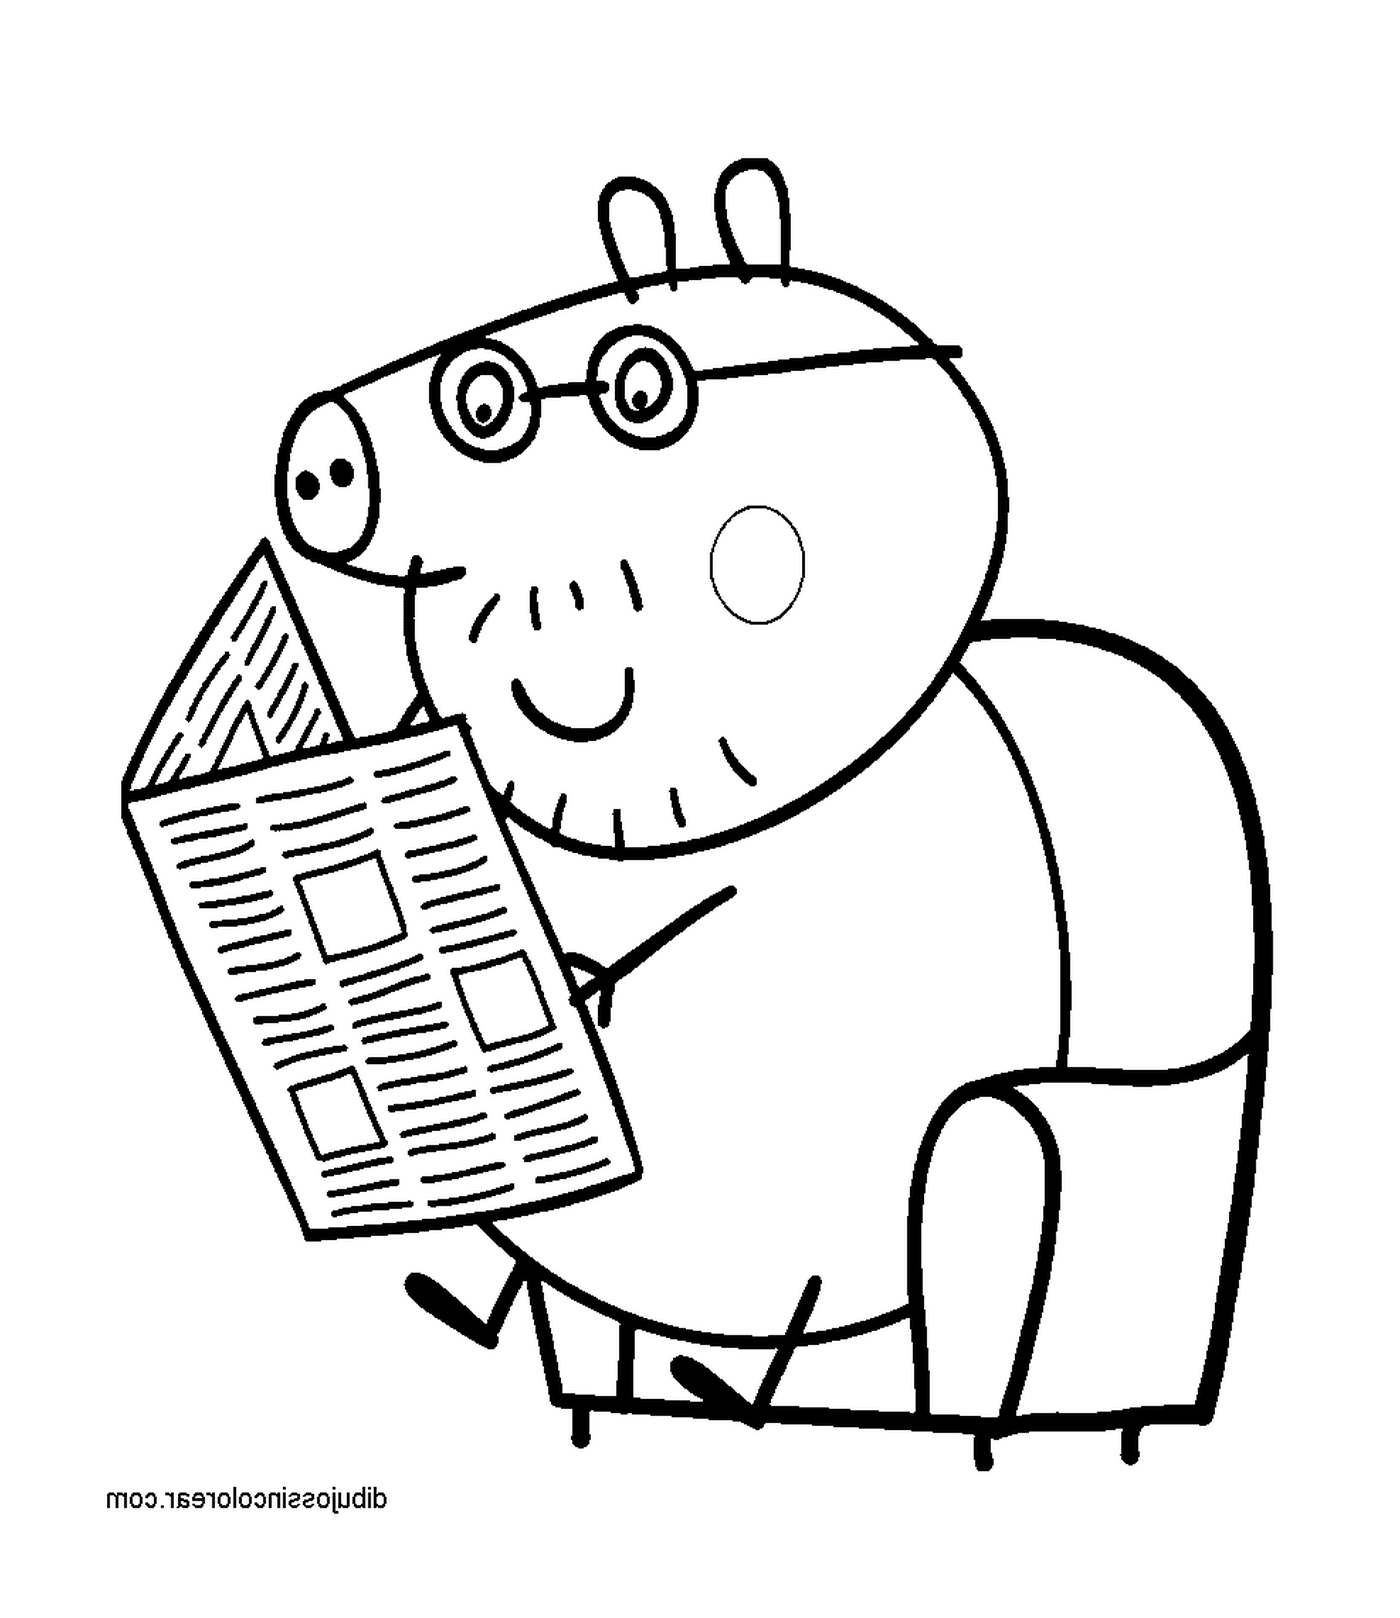  Peppa Pig reading a newspaper 